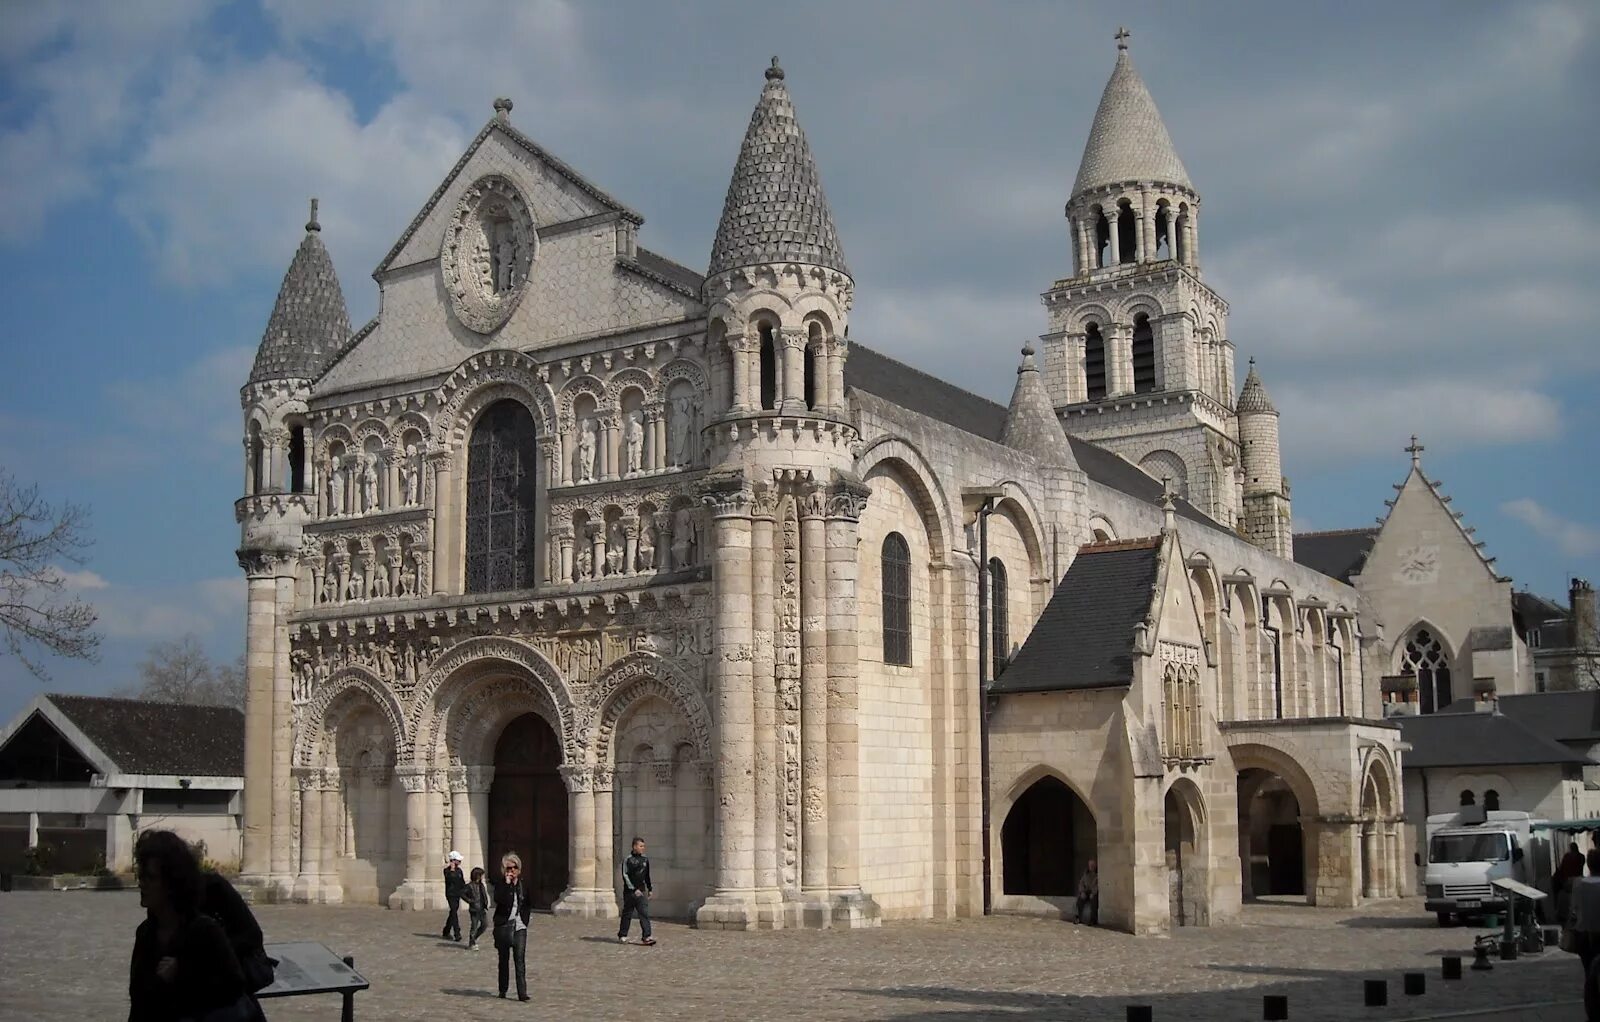 Ля гранде даме. Церковь Нотр-дам-ля-Гранд, Франция.